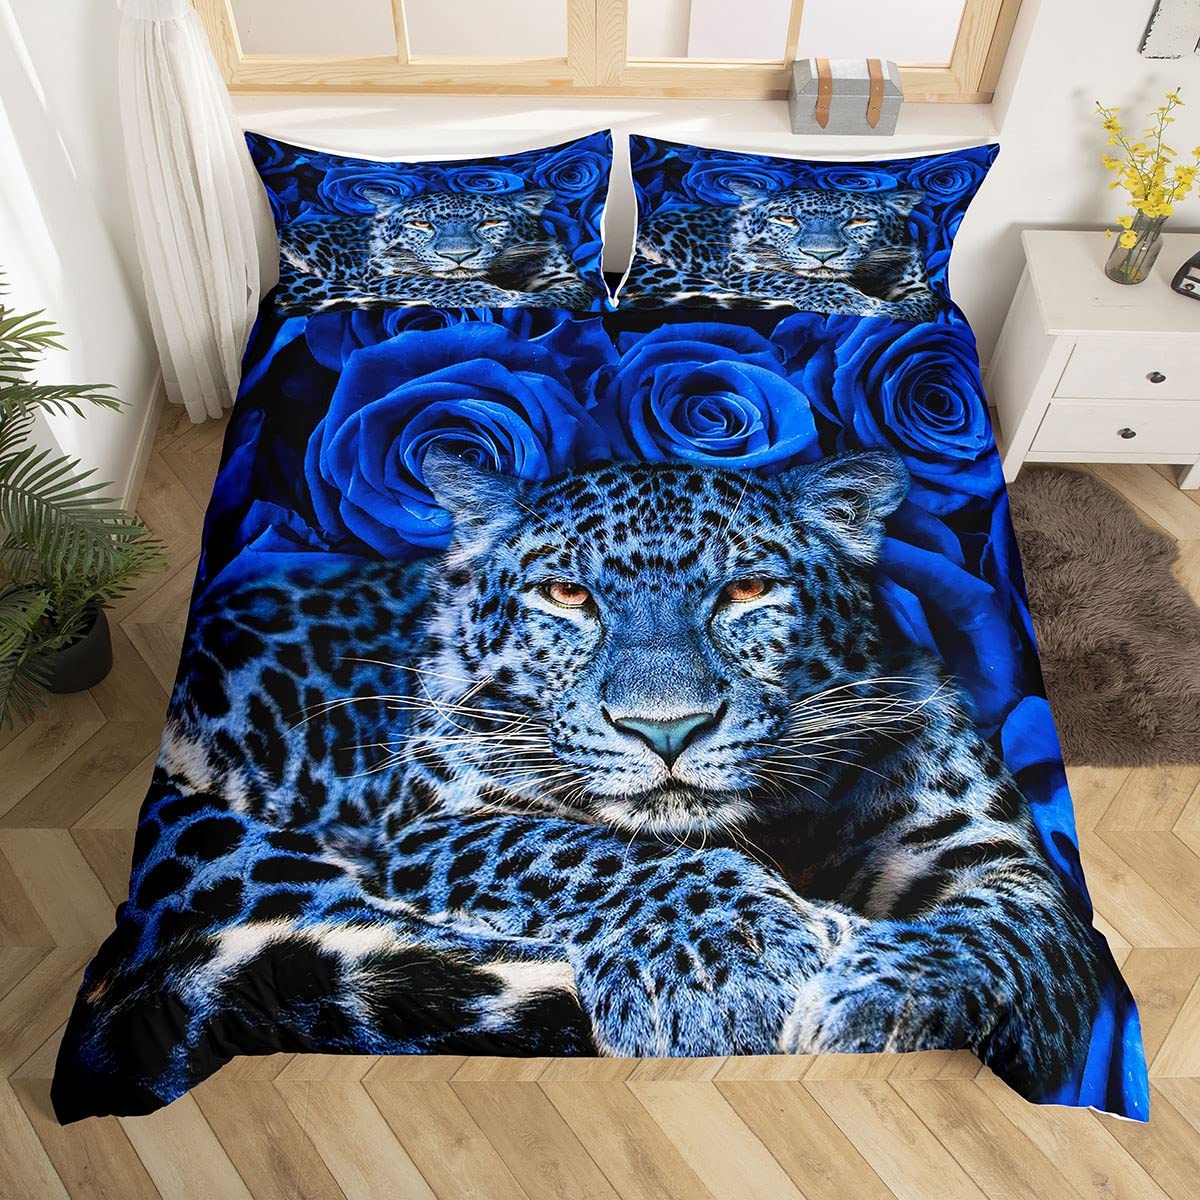 Blue leopard duvet cover